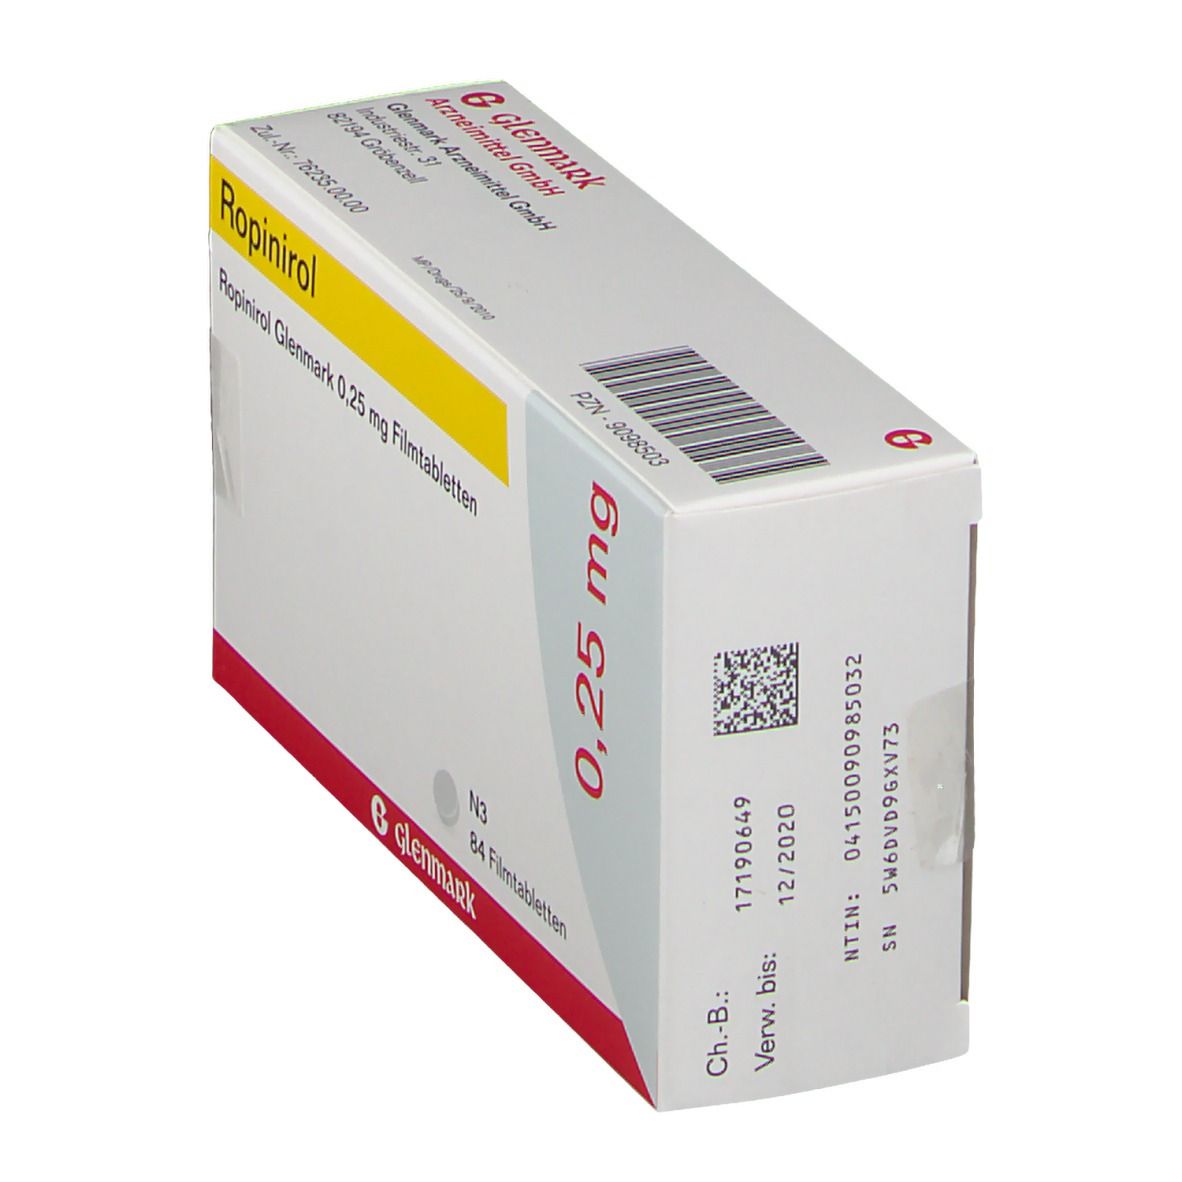 Ropinirol Glenmark 0,25 mg